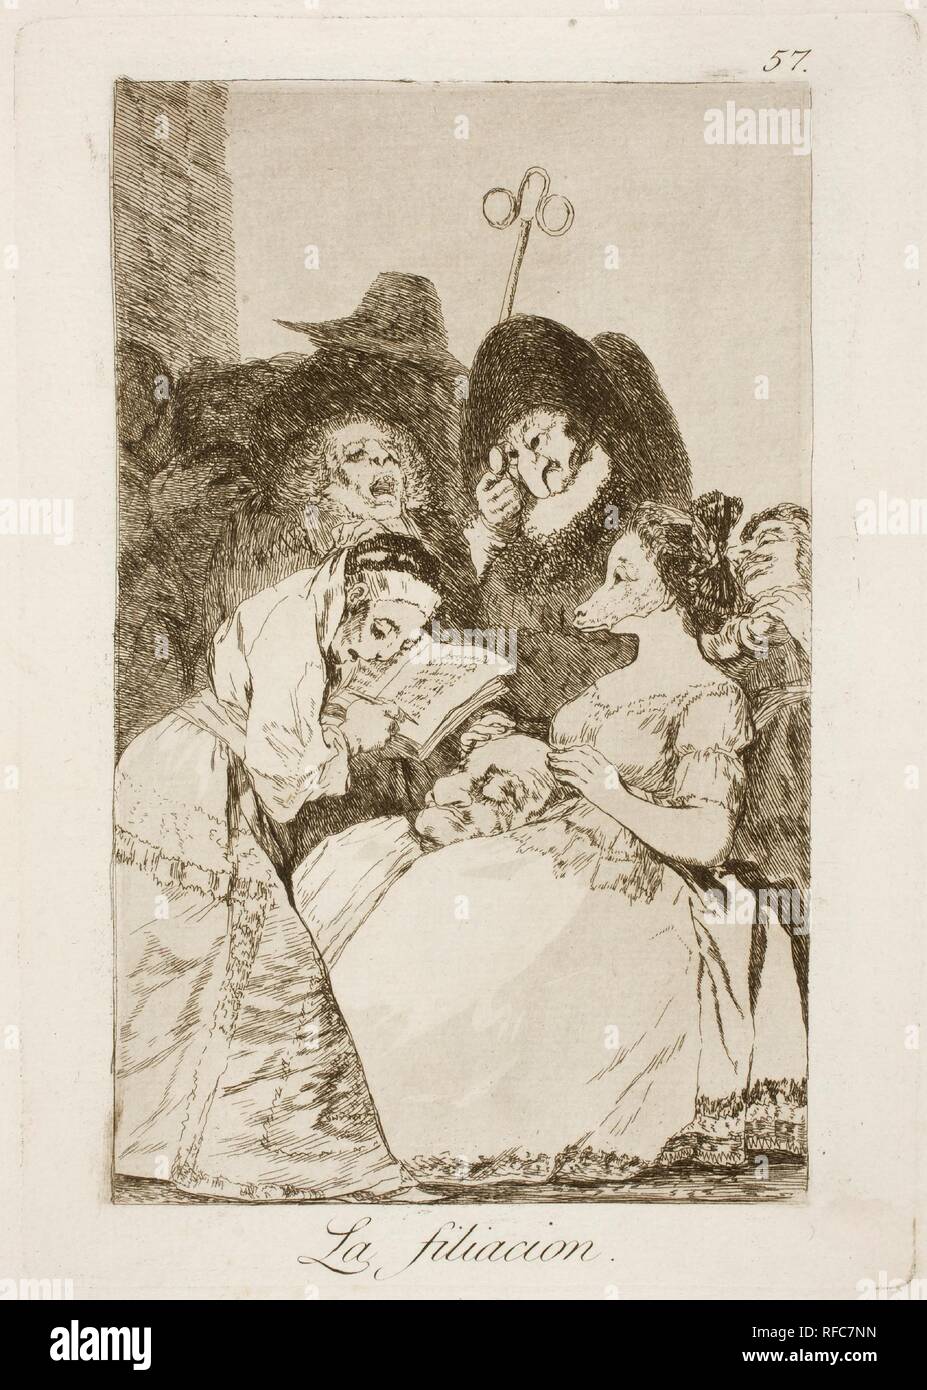 Francisco de Goya y Lucientes / 'The filiation'. 1797 - 1799. Etching, Aquatint on ivory laid paper. Museum: Museo del Prado, Madrid, España. Stock Photo